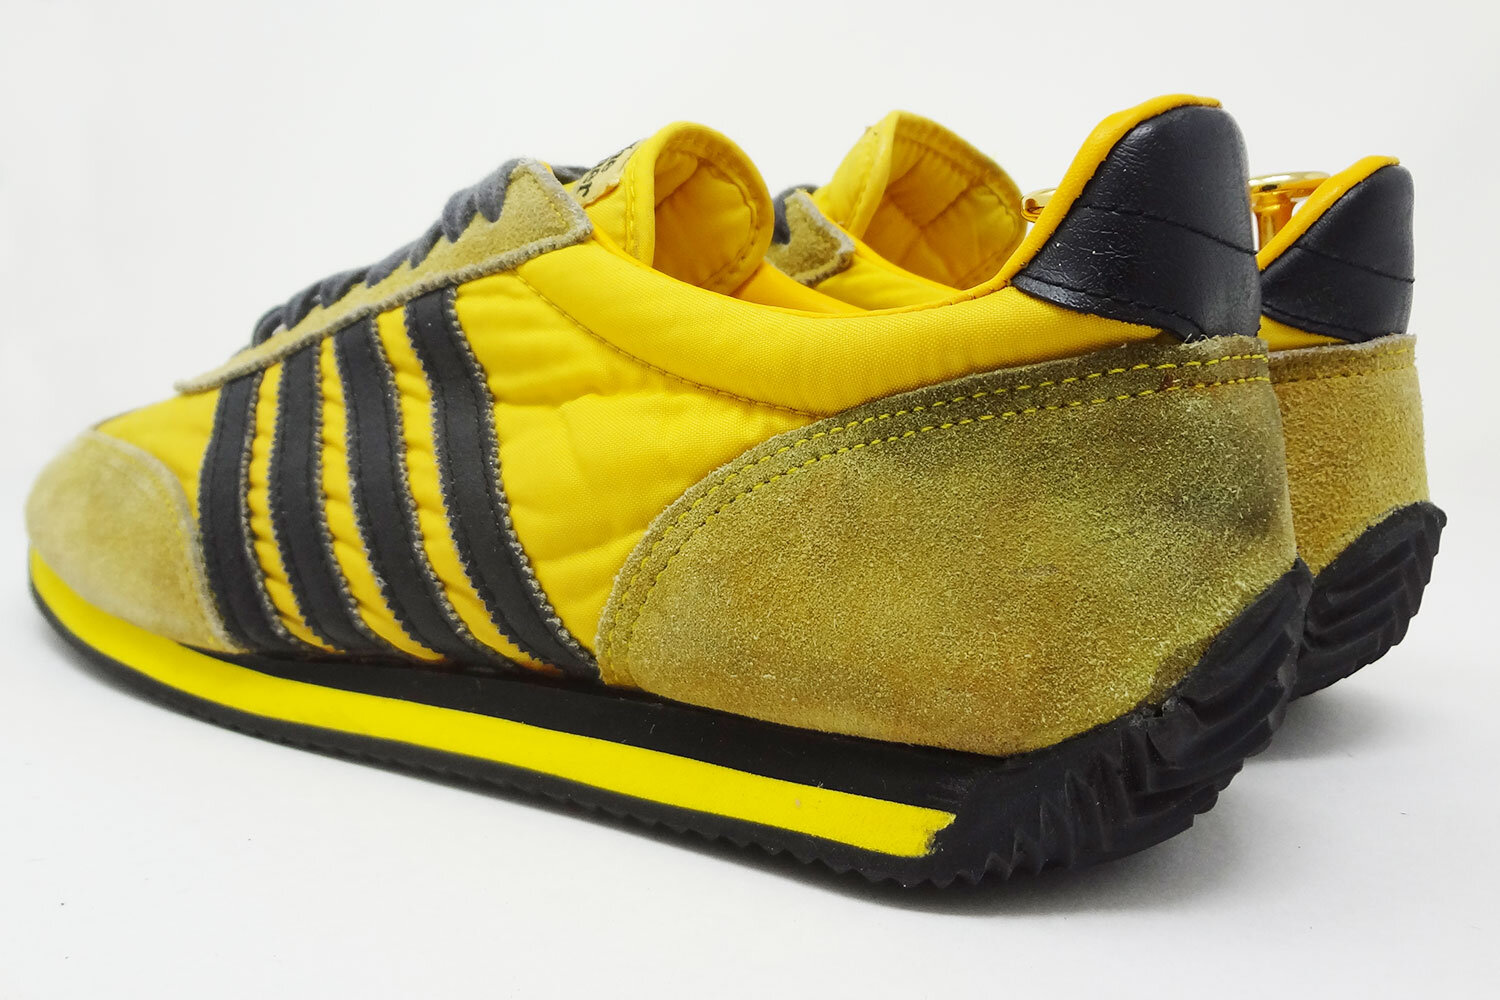 Sears The Winner yellow and black vintage sneaker sole repair @ The Deffest